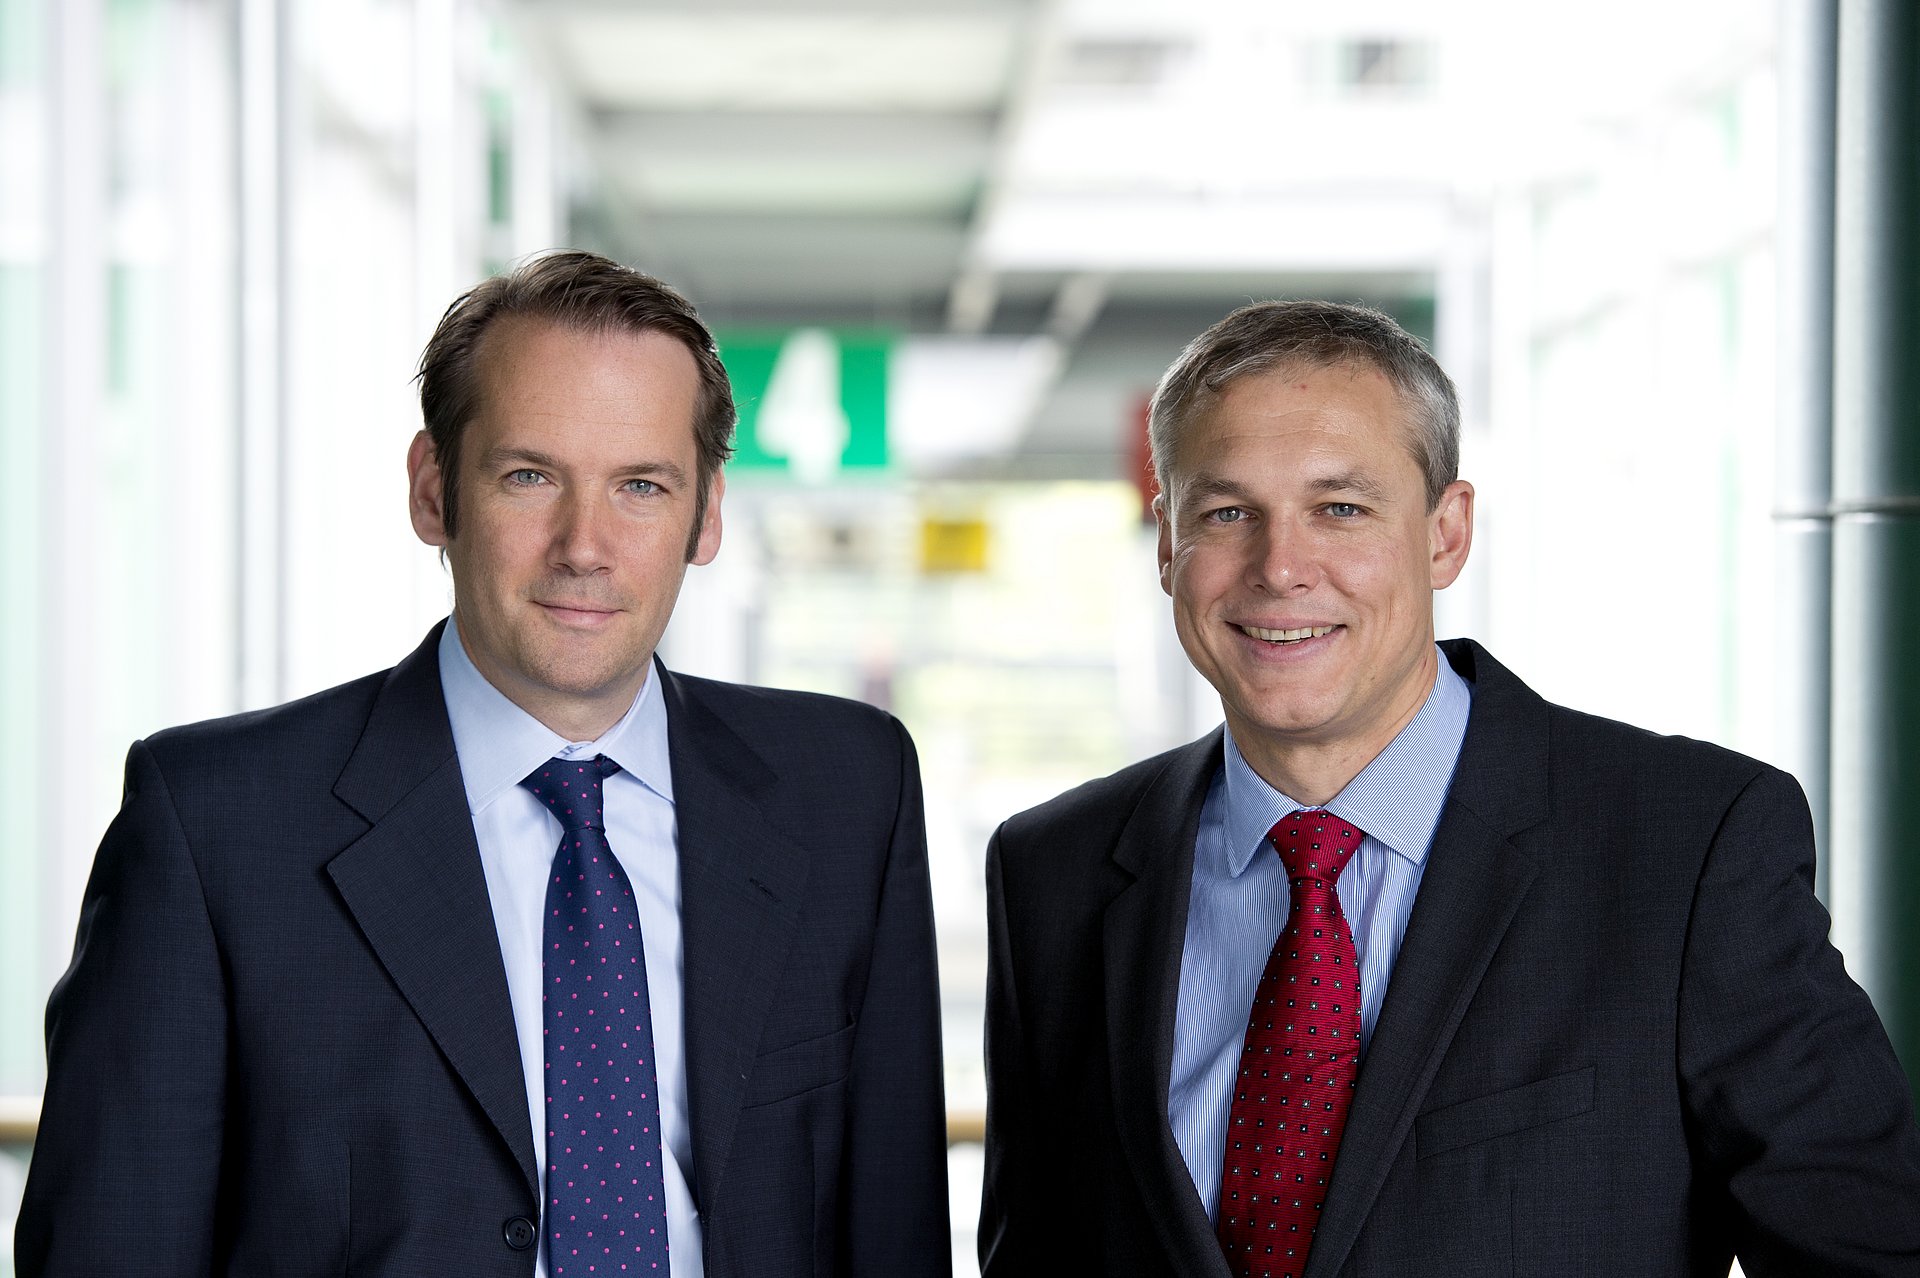 Dr. Valentin Kahl and Dr. Roman Zantl of ibidi